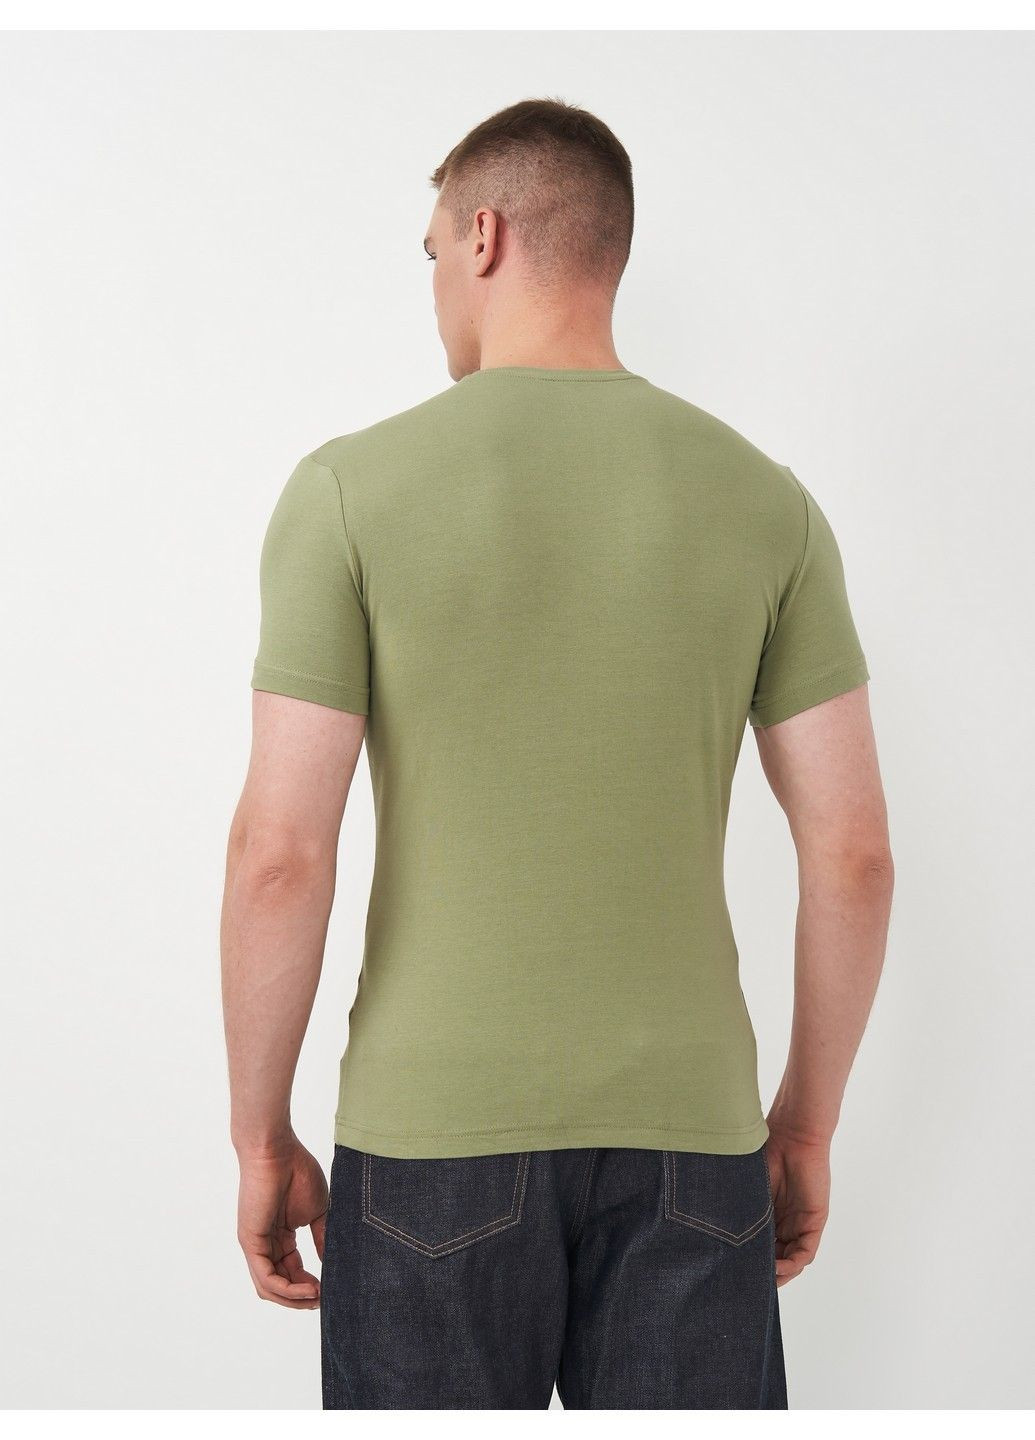 Хаки (оливковая) футболка с микро-дефектом H&M